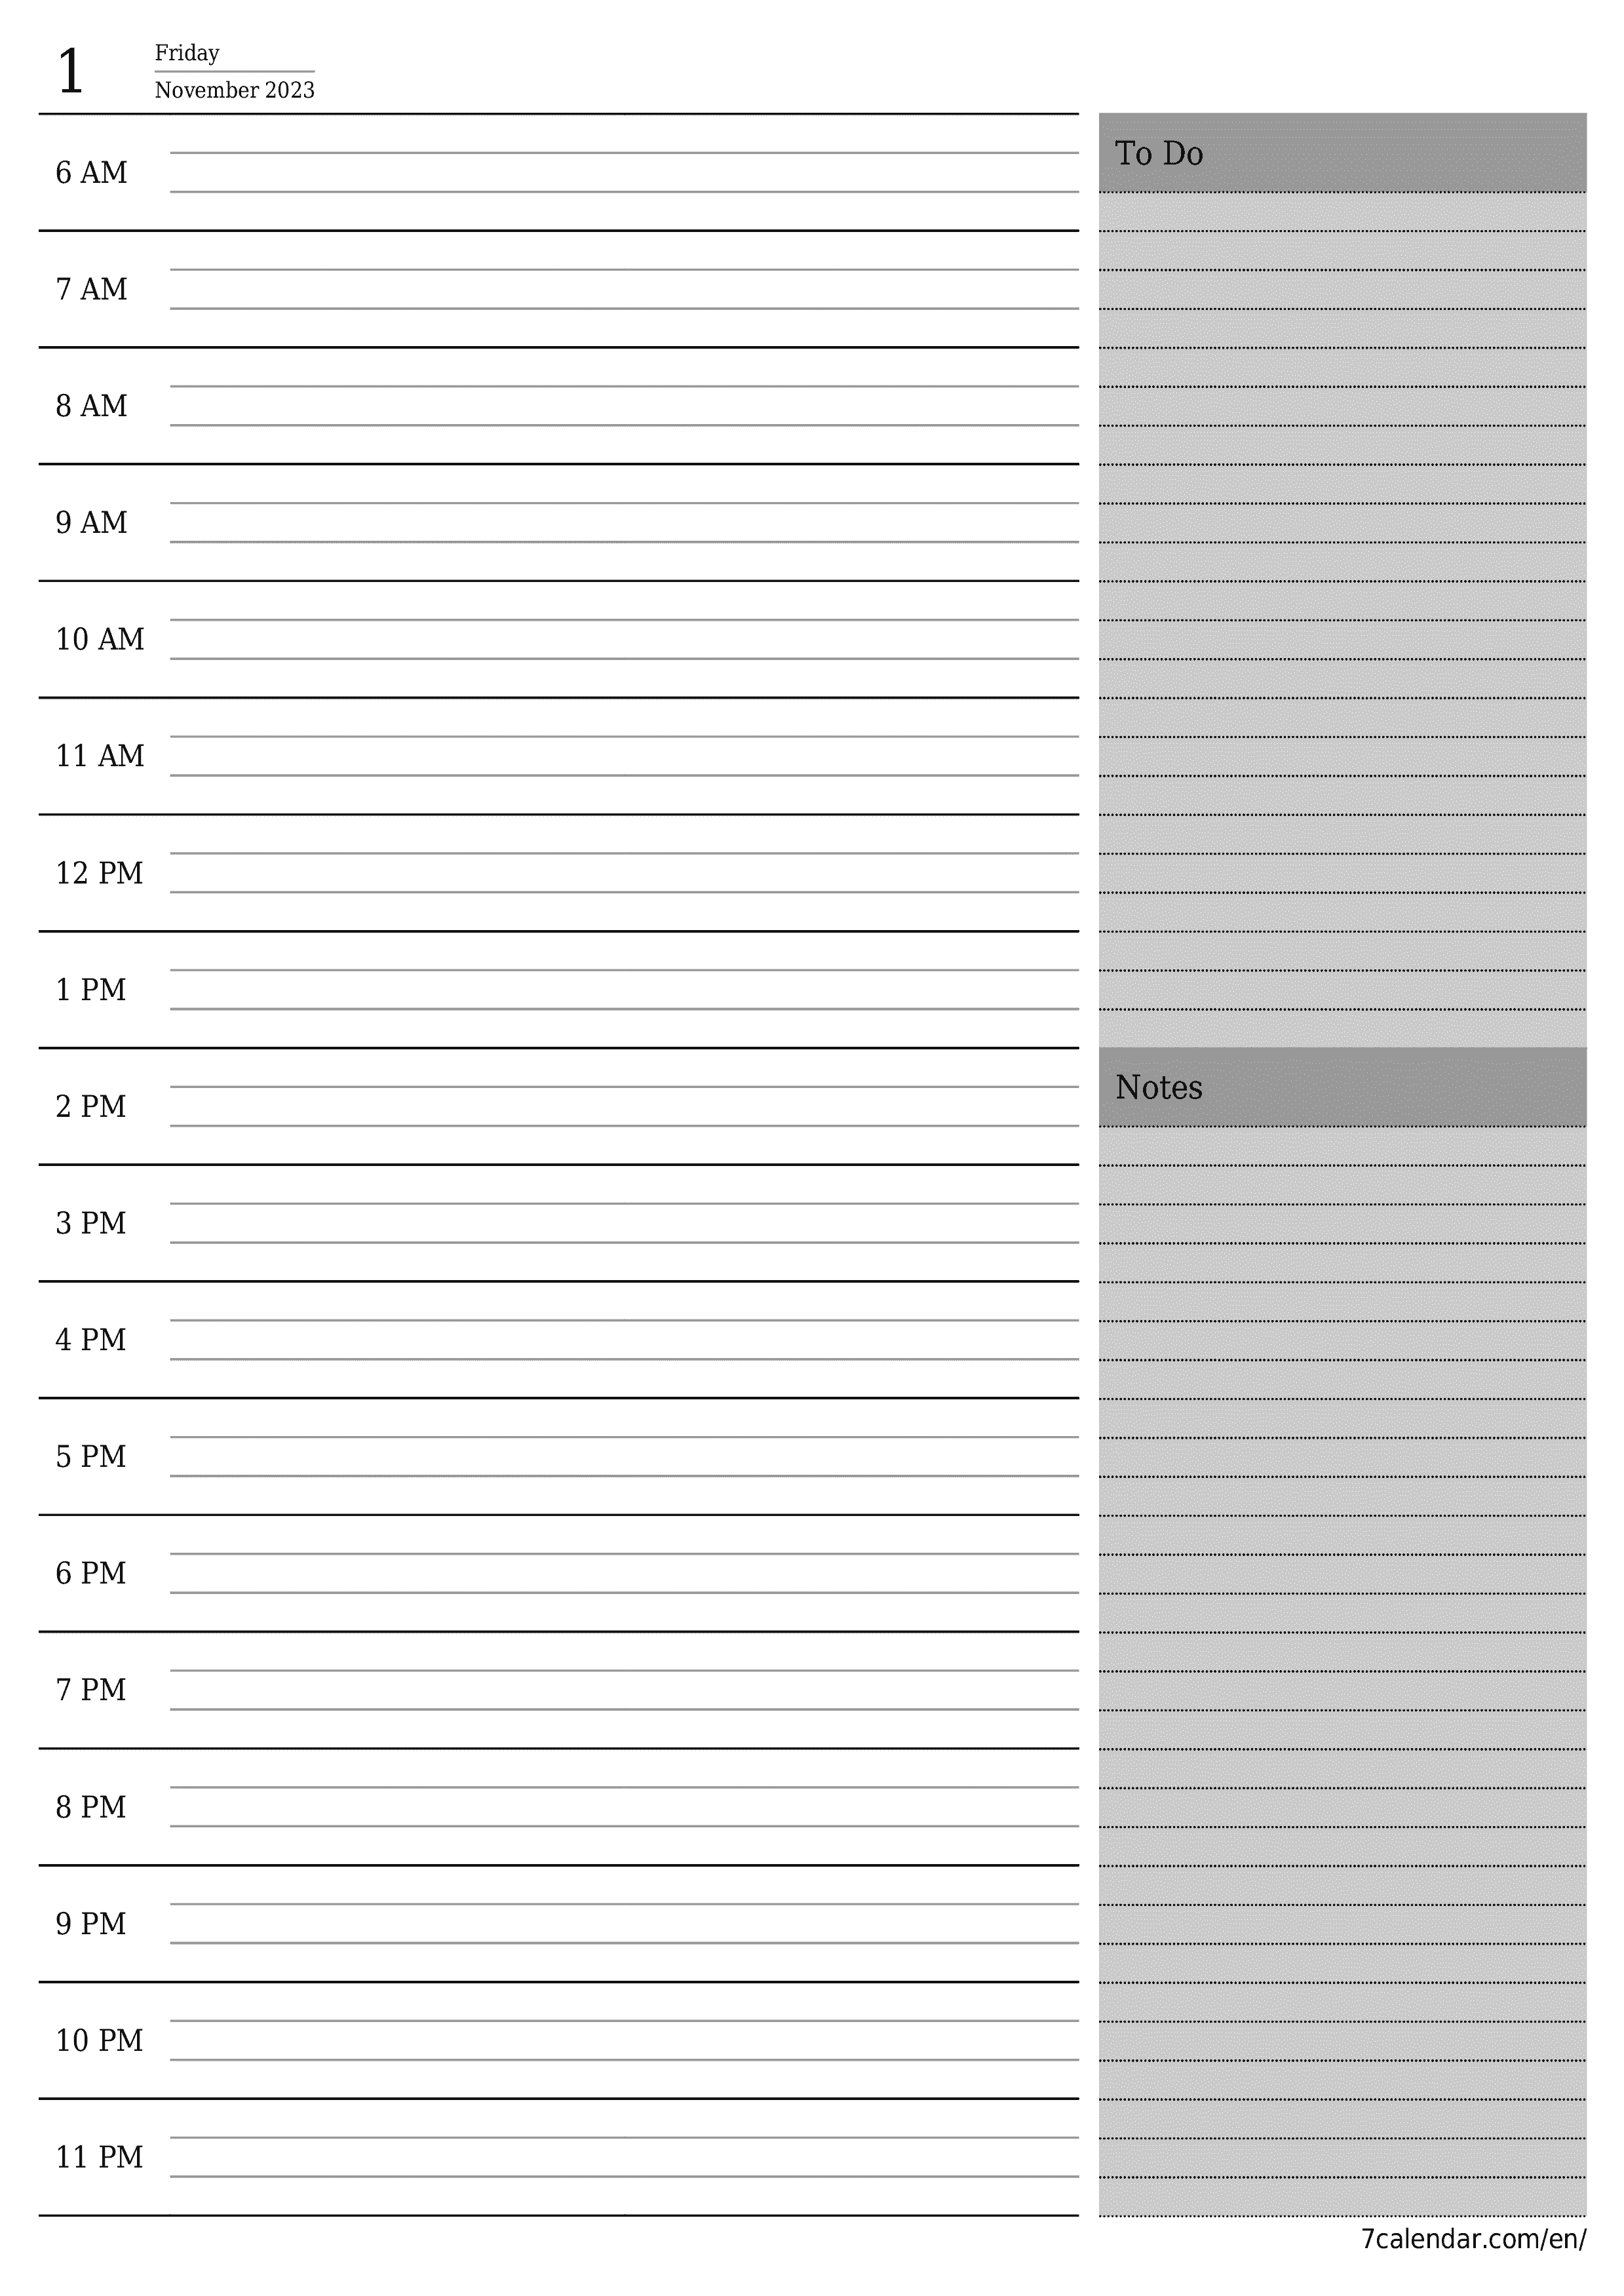 Blank calendar November 2023